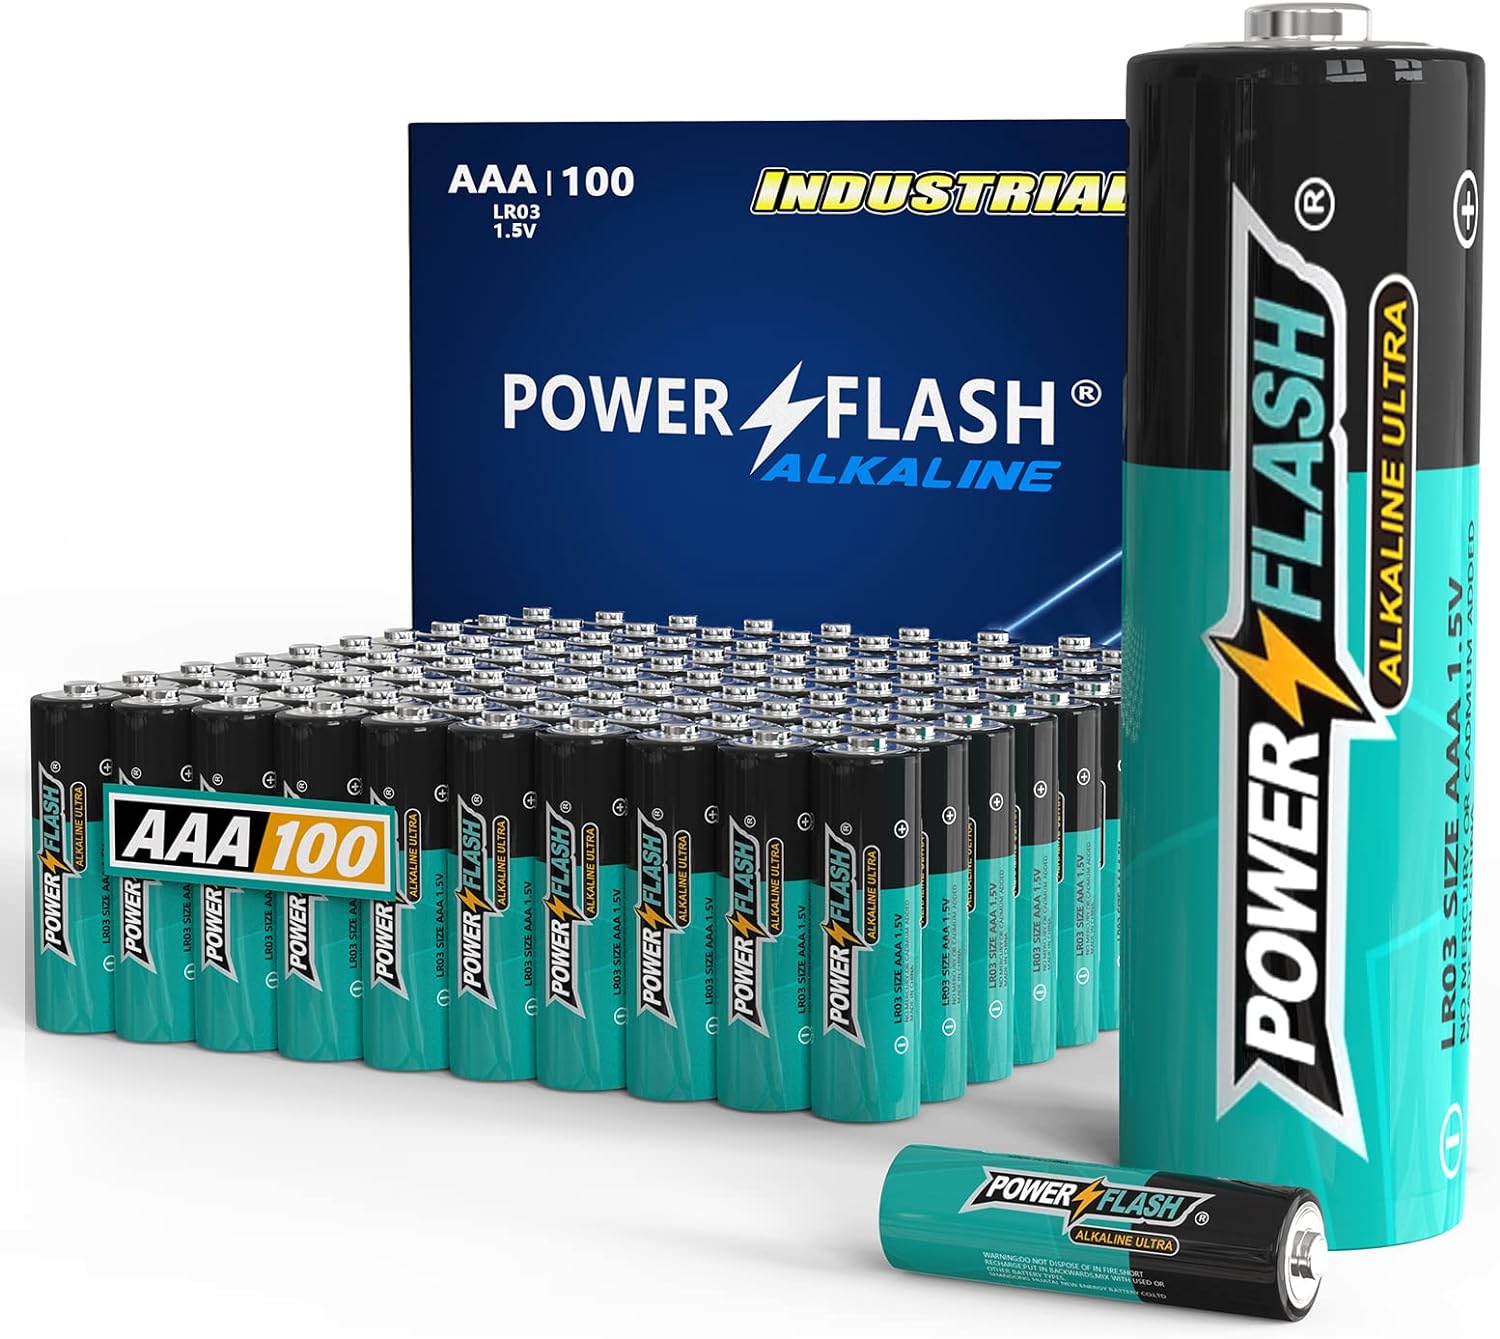 Baterías AAA con fecha fresca, paquete industrial de 100 unidades, bat -  VIRTUAL MUEBLES